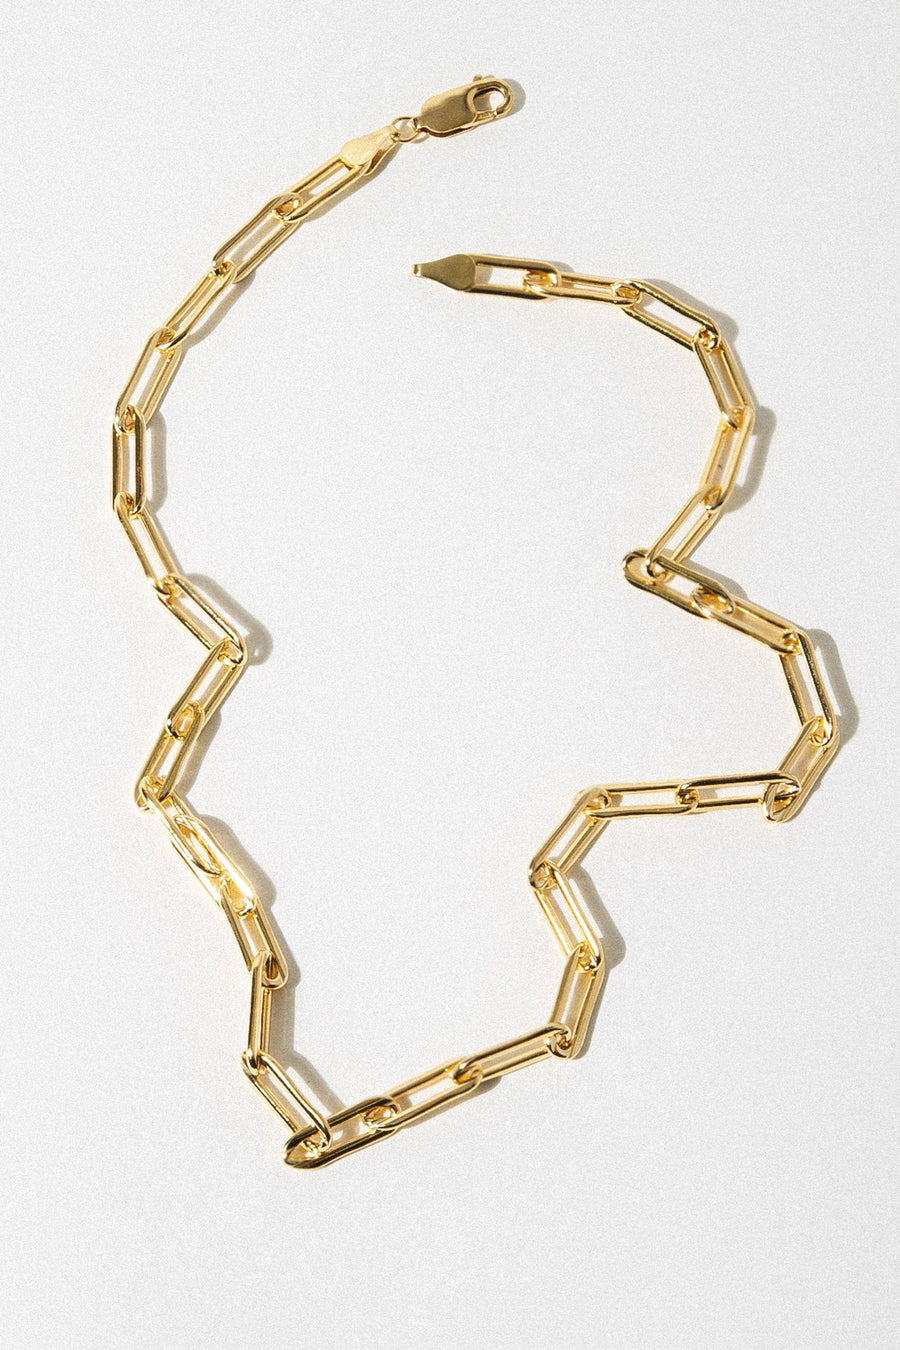 CGM Jewelry Gold Halcyon Necklace